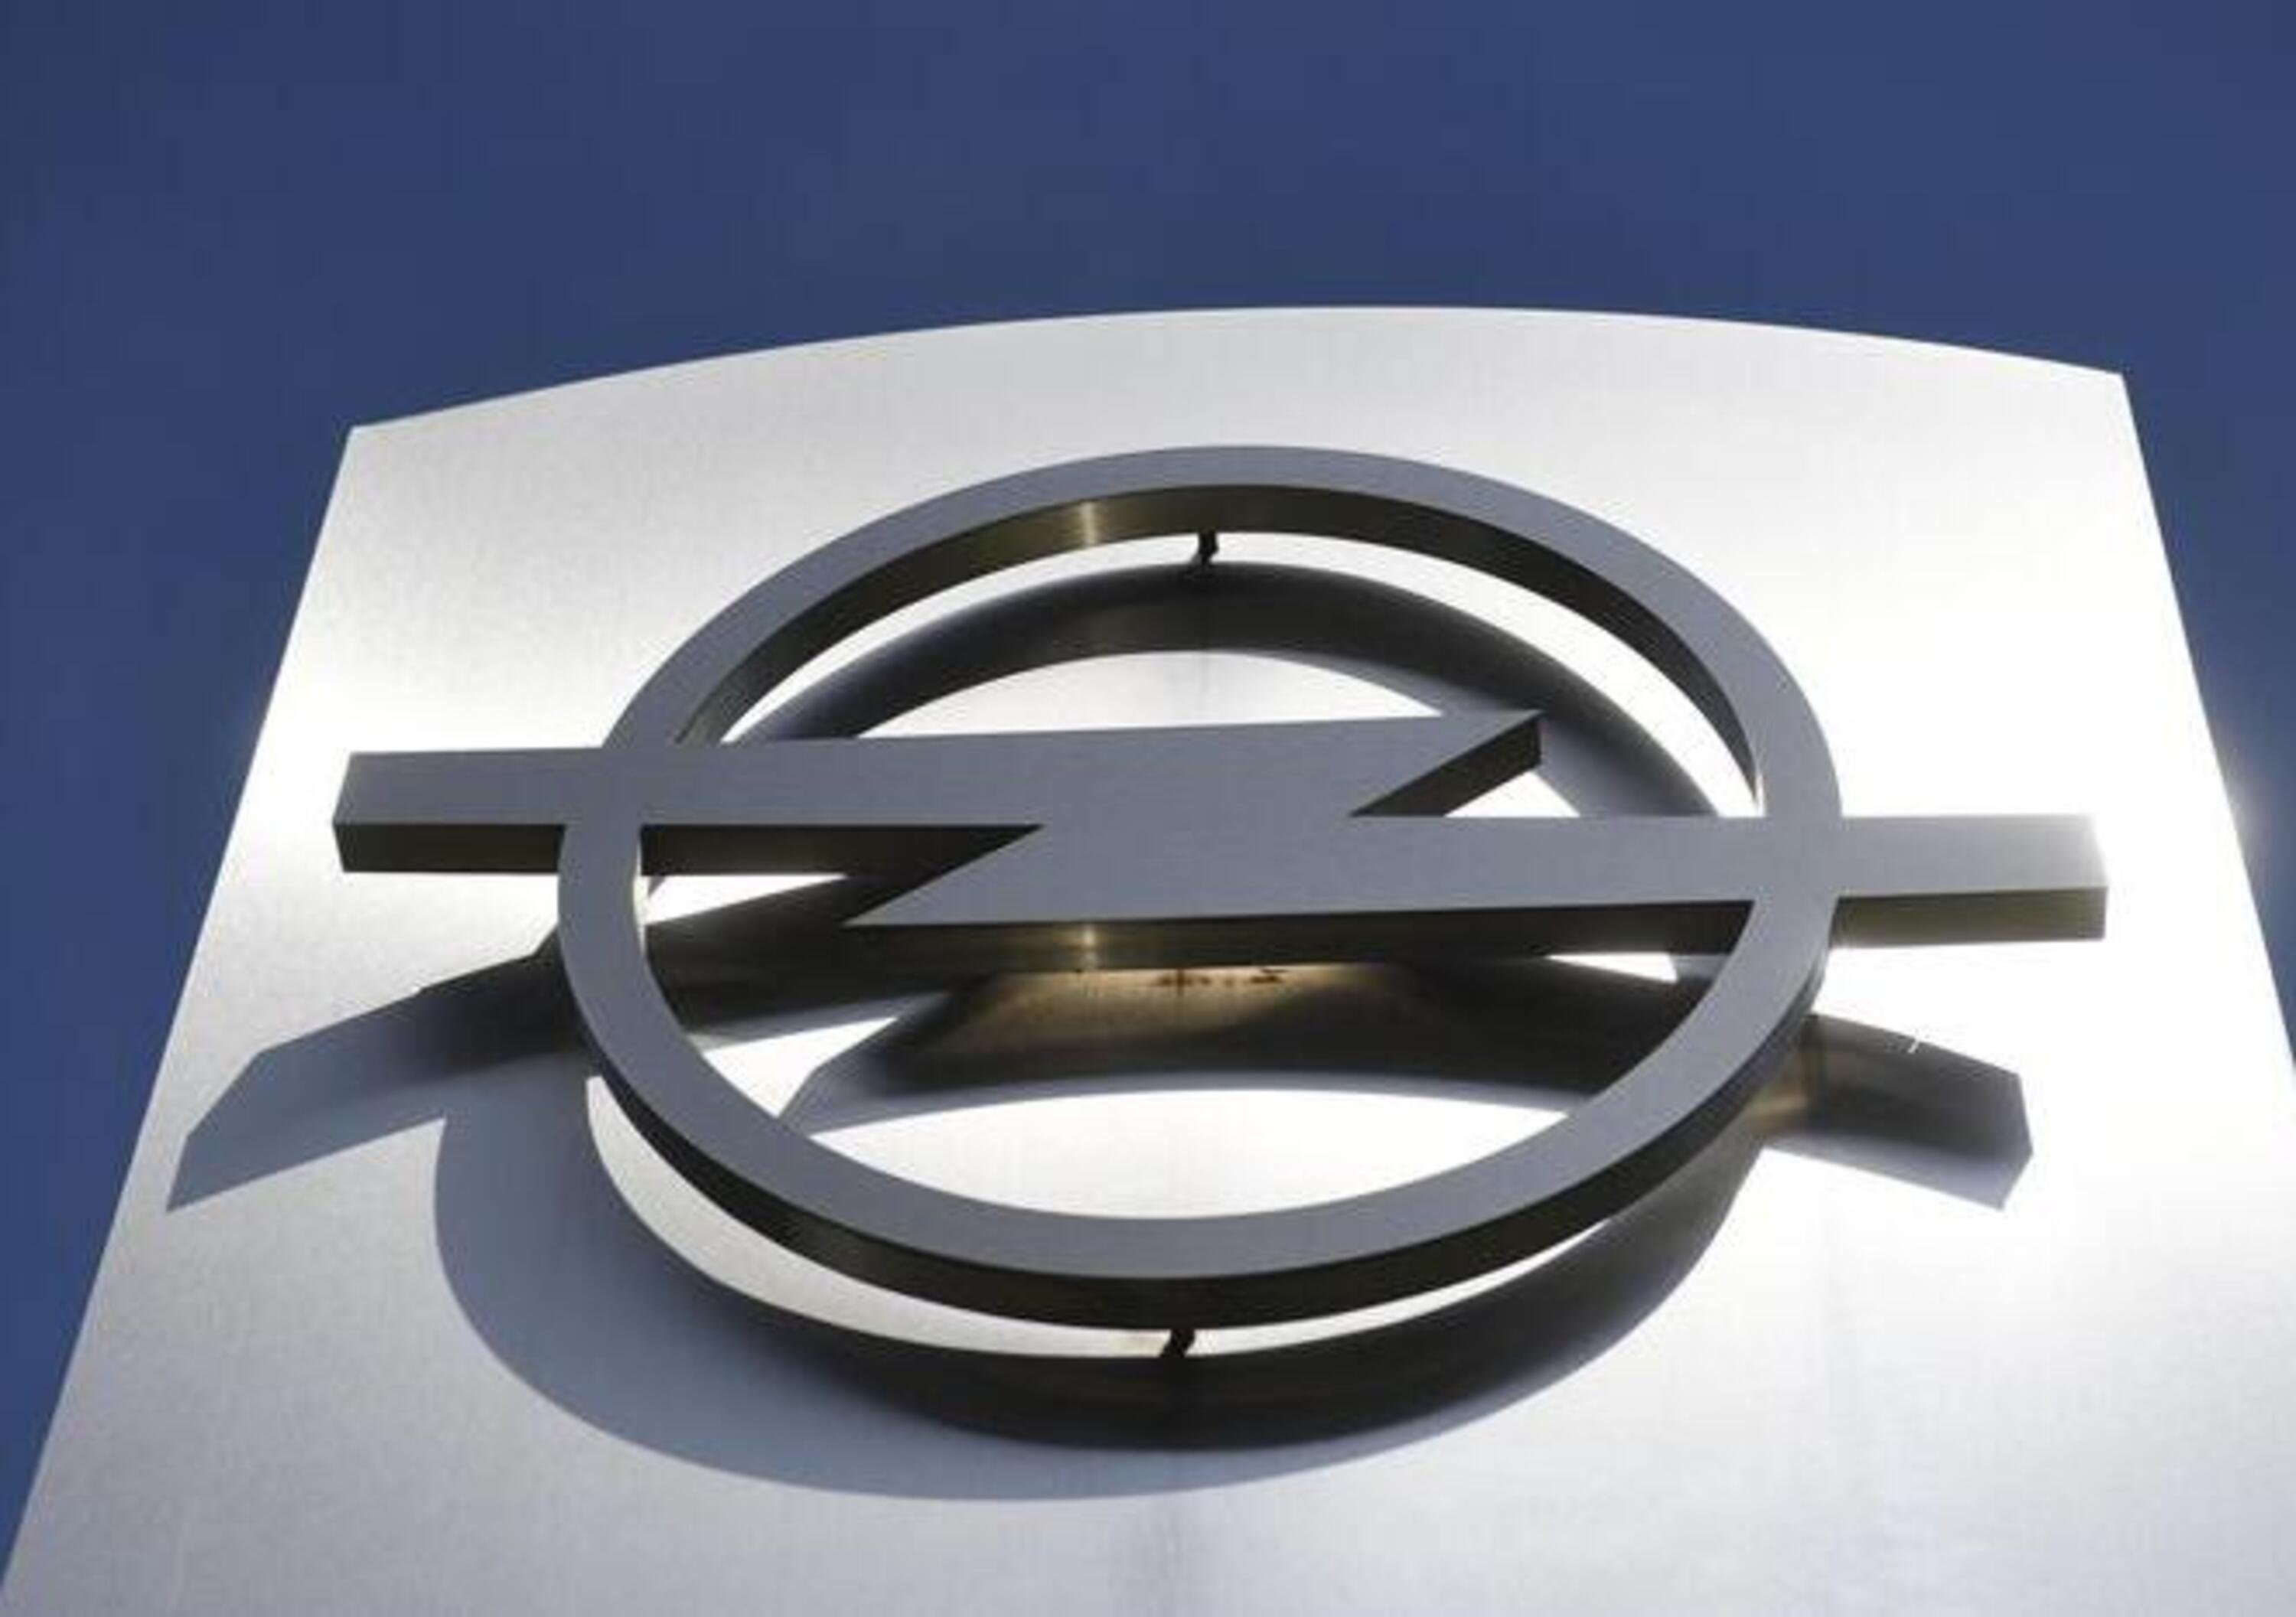 Opel, perquisizioni nelle fabbriche per indagini su emissioni diesel